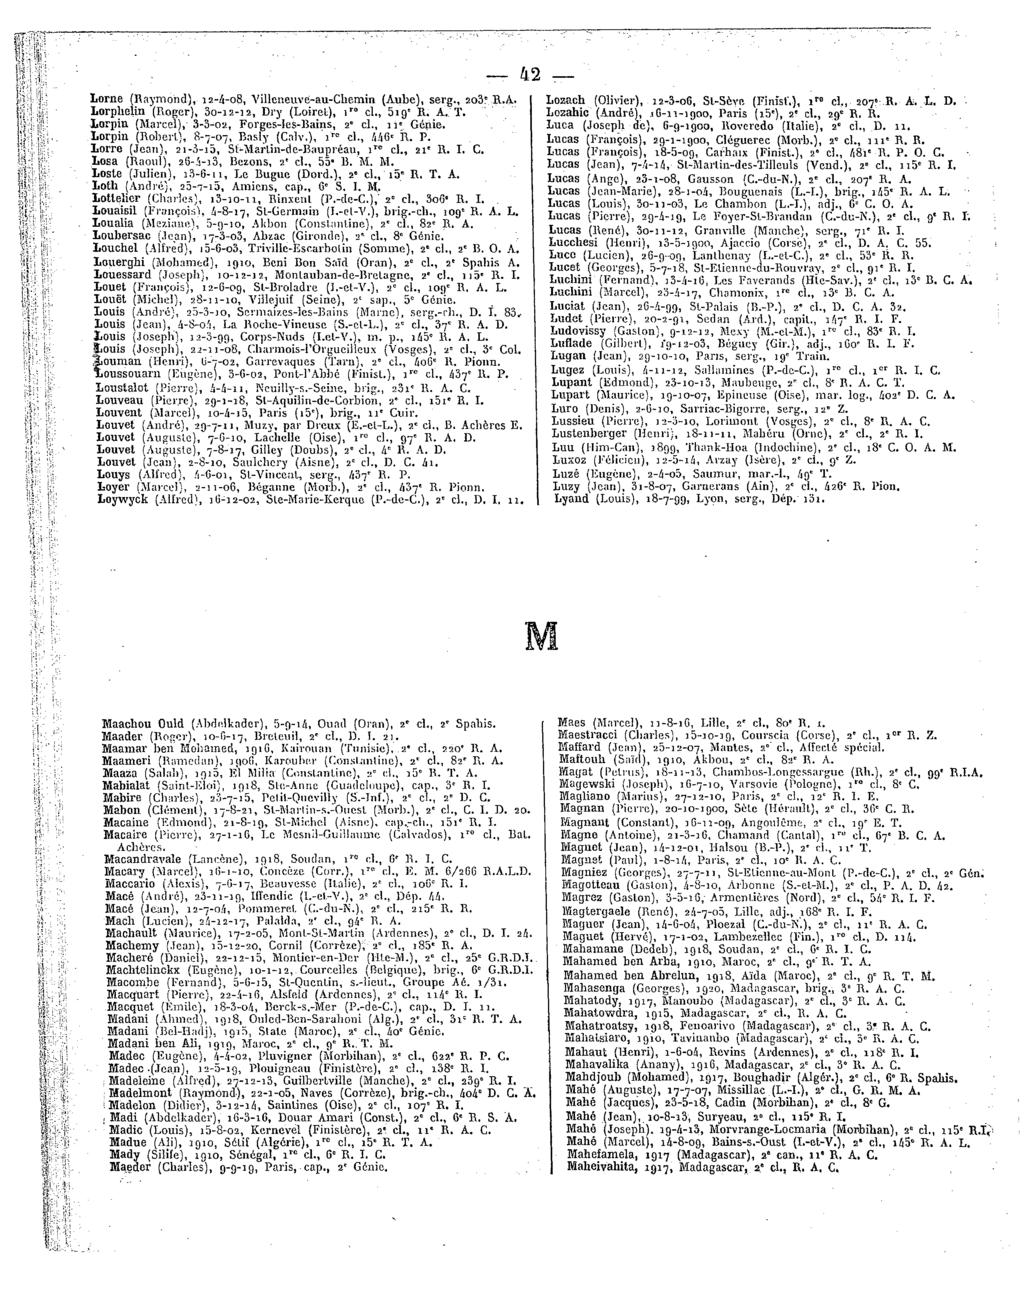 _ 42 Lozach(Olivier), 12-3-06, Sl-Sèye(Finist.),1 cl,, 207"R. A.L. D. Lozahic(André),.16-31-3900, Pa3-is(i5 ),2' cl.,29 R.R. Luca(Josephde),6-g-igoo,Roveredo(Italie),2*cl.,D. 11.